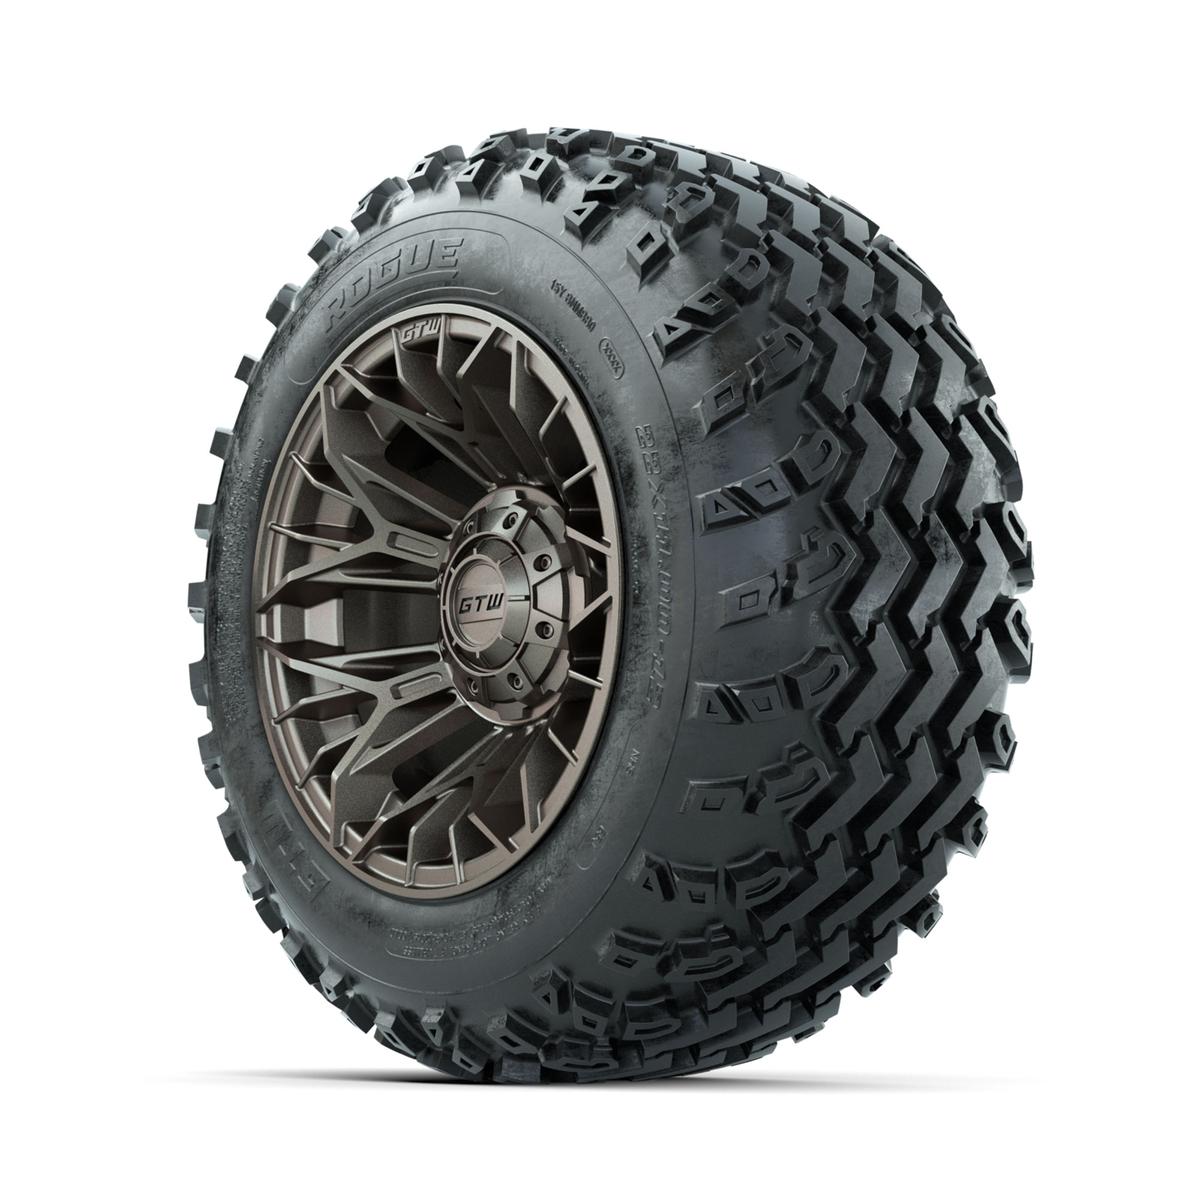 GTW Stellar Matte Bronze 12 in Wheels with 22x11.00-12 Rogue All Terrain Tires – Full Set